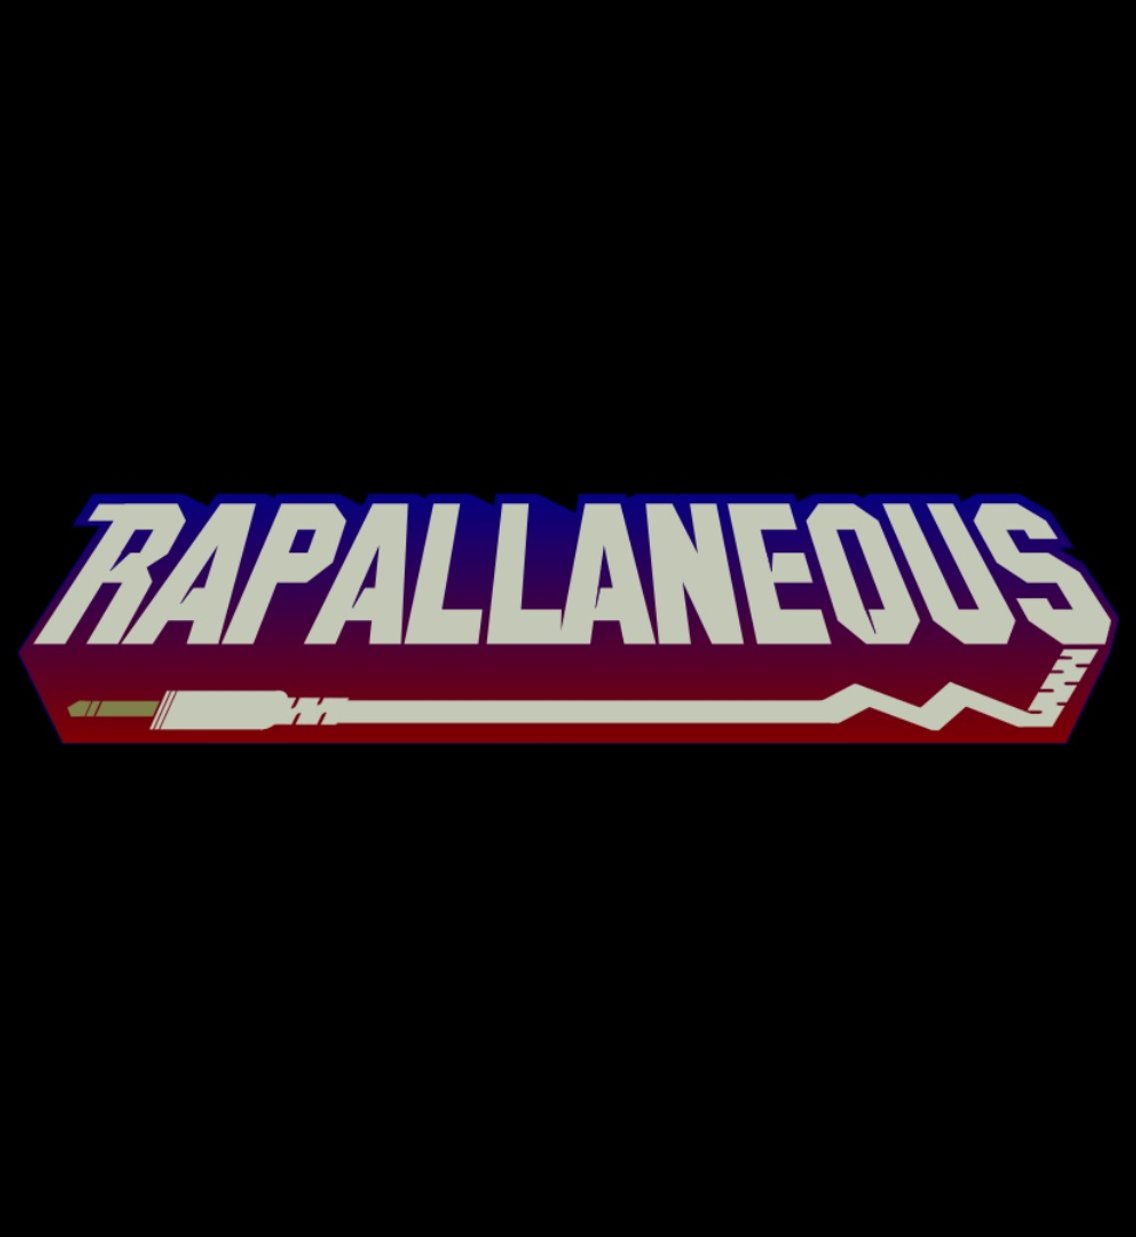 Rapallaneous - Cover Image